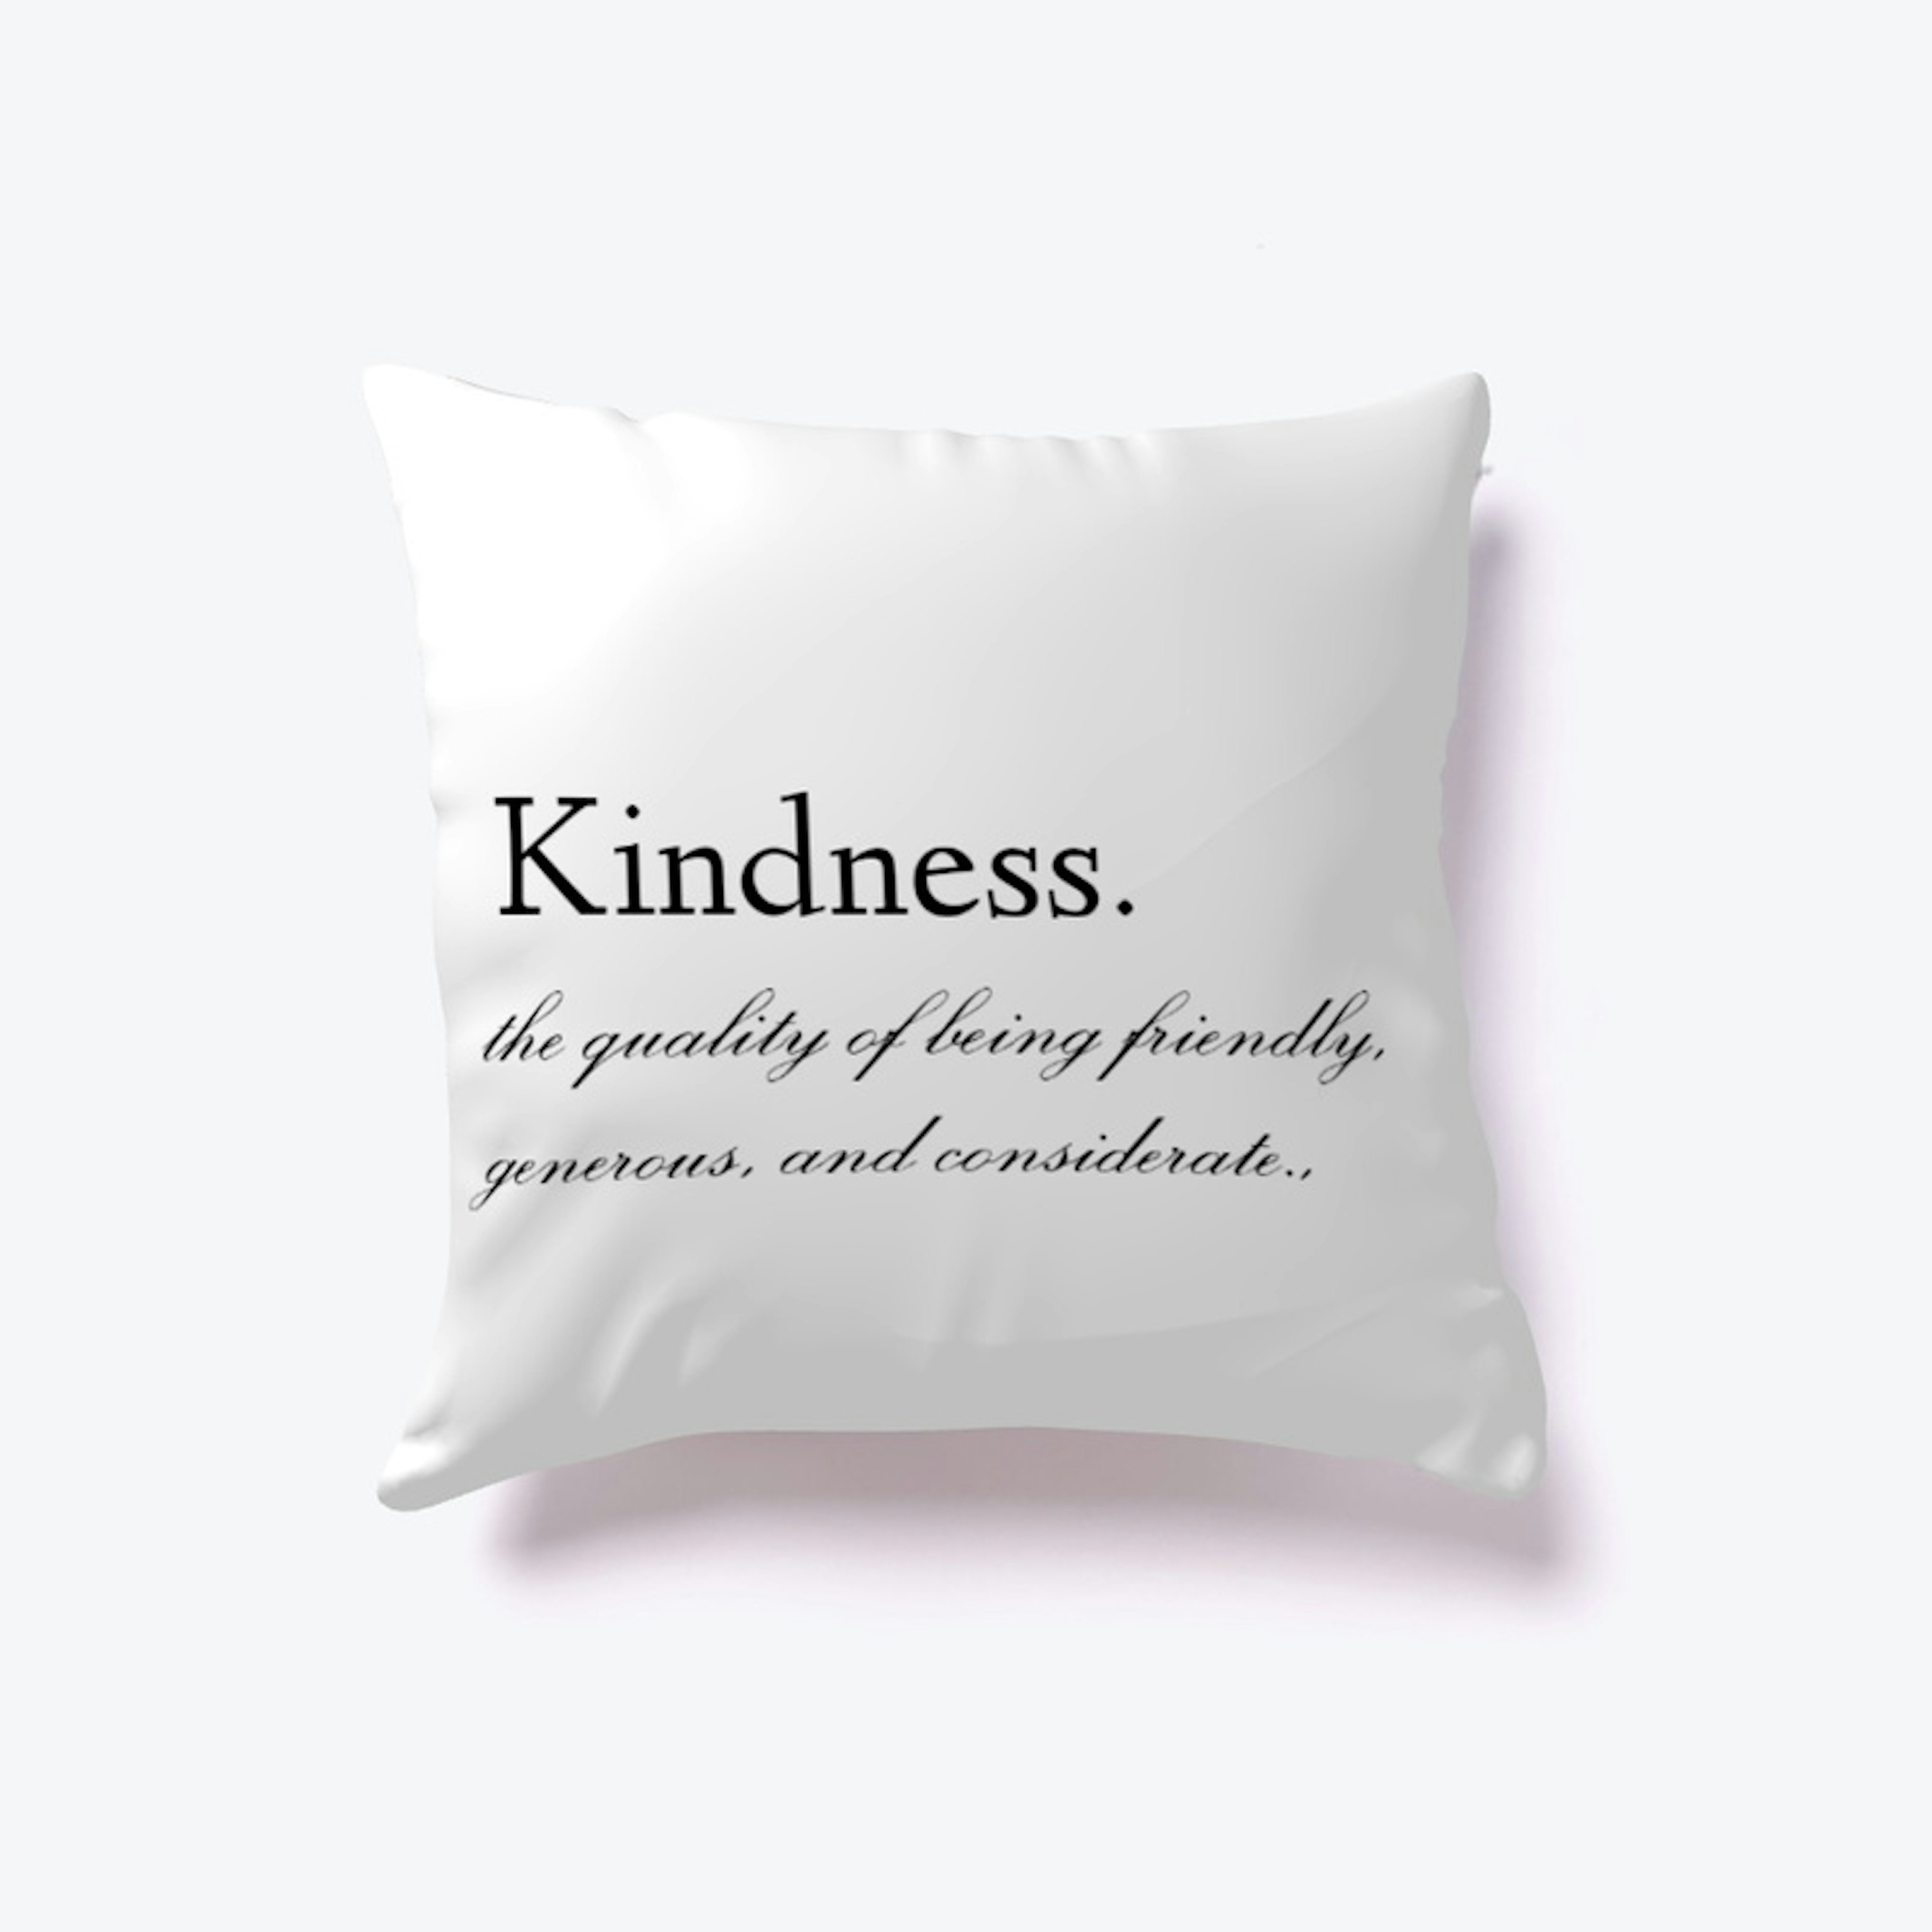 Kindness Definition Pillow